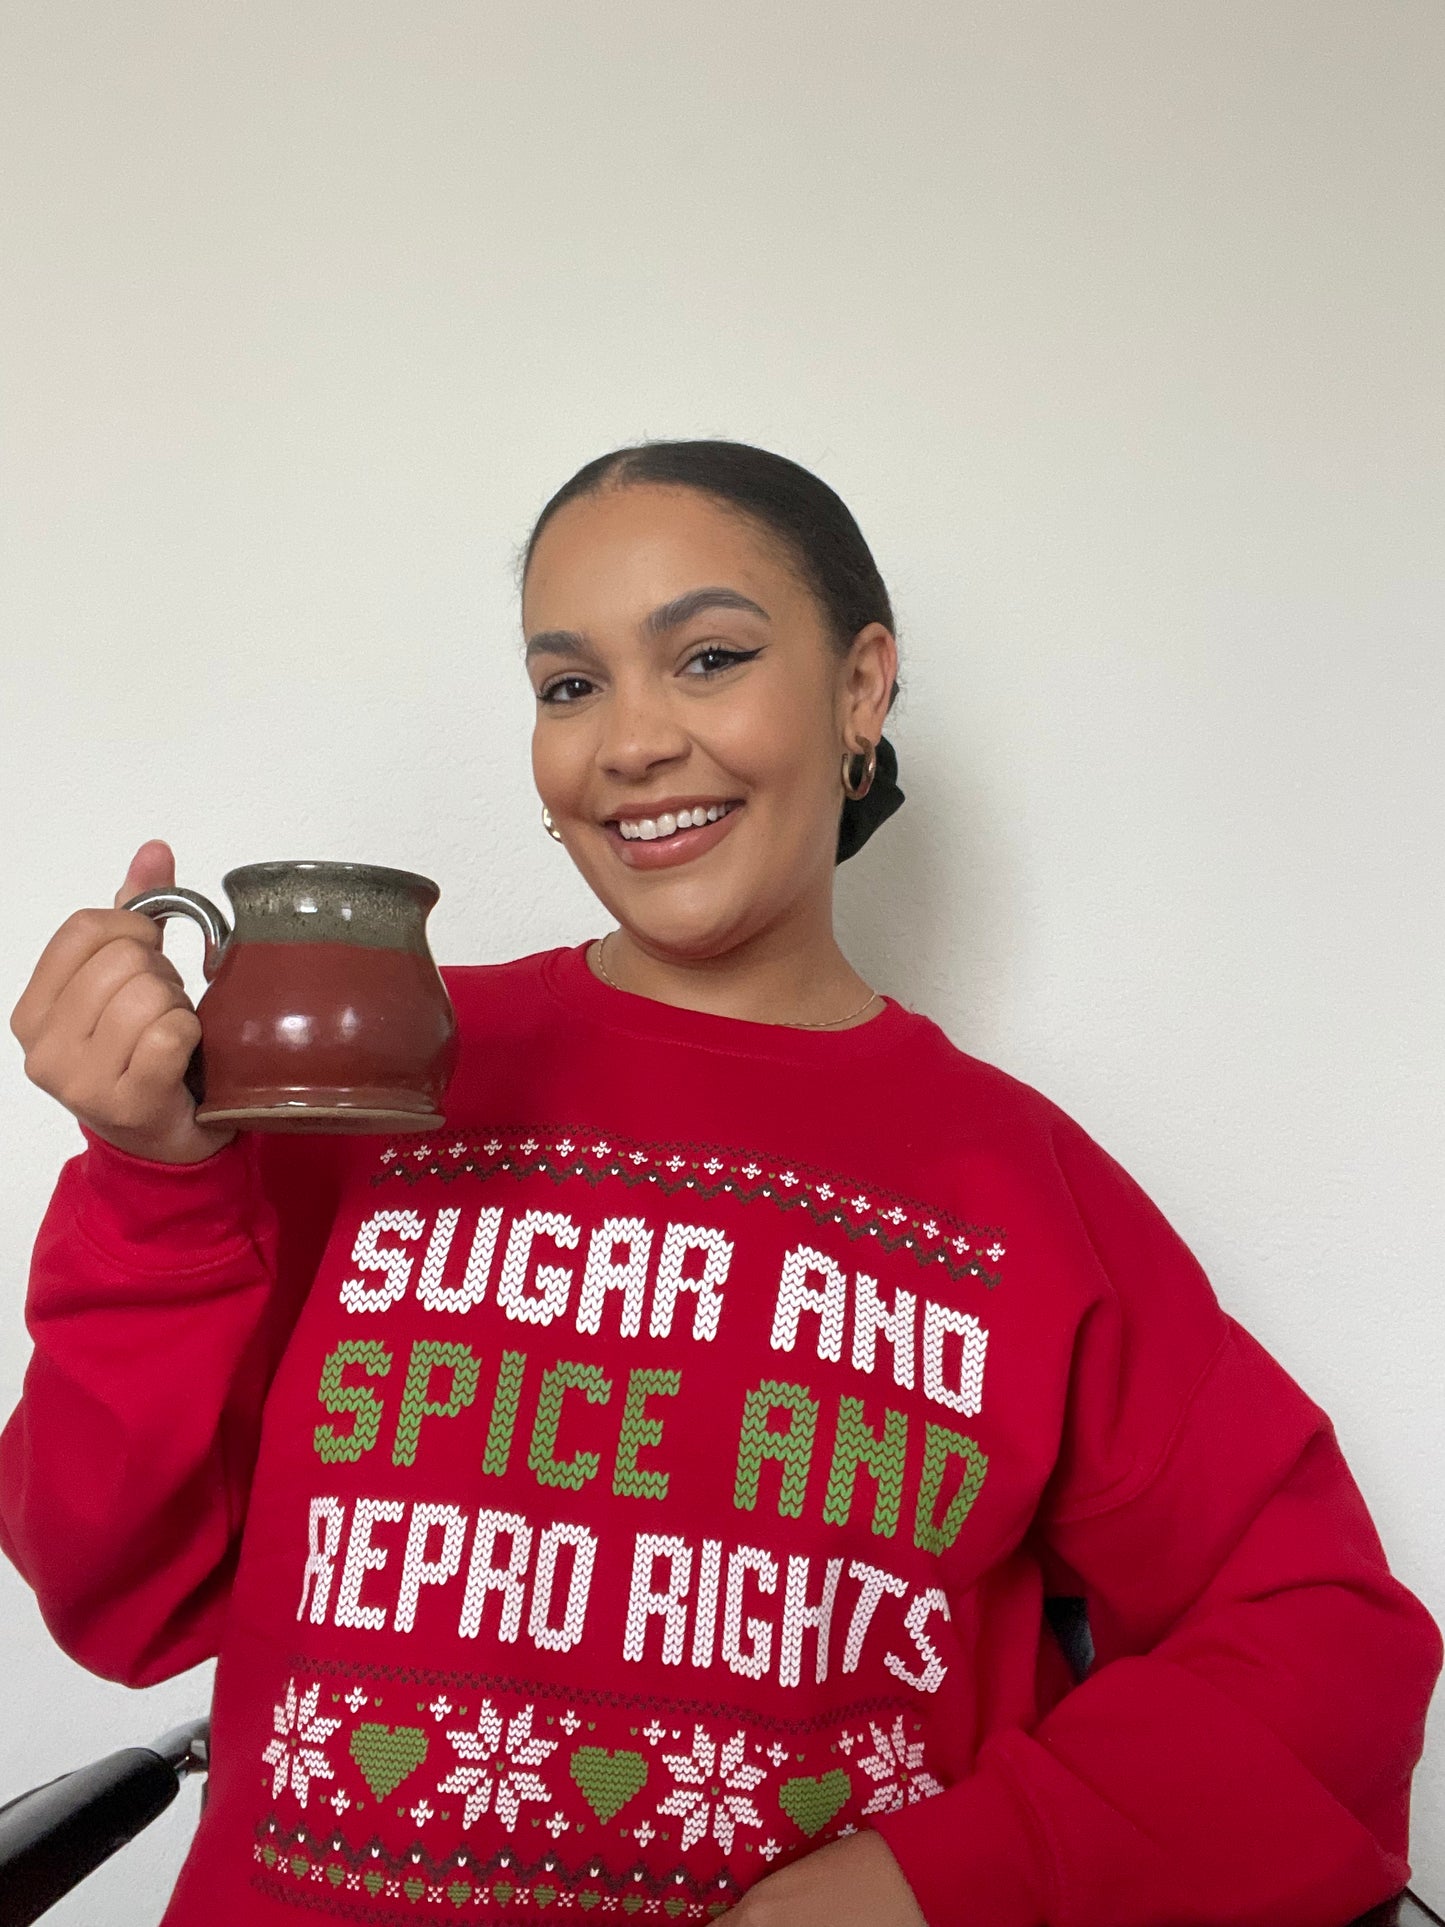 Sugar & Spice & Repro Rights Crewneck Sweatshirt (Phenomenal x The Sweet Feminist) - Red